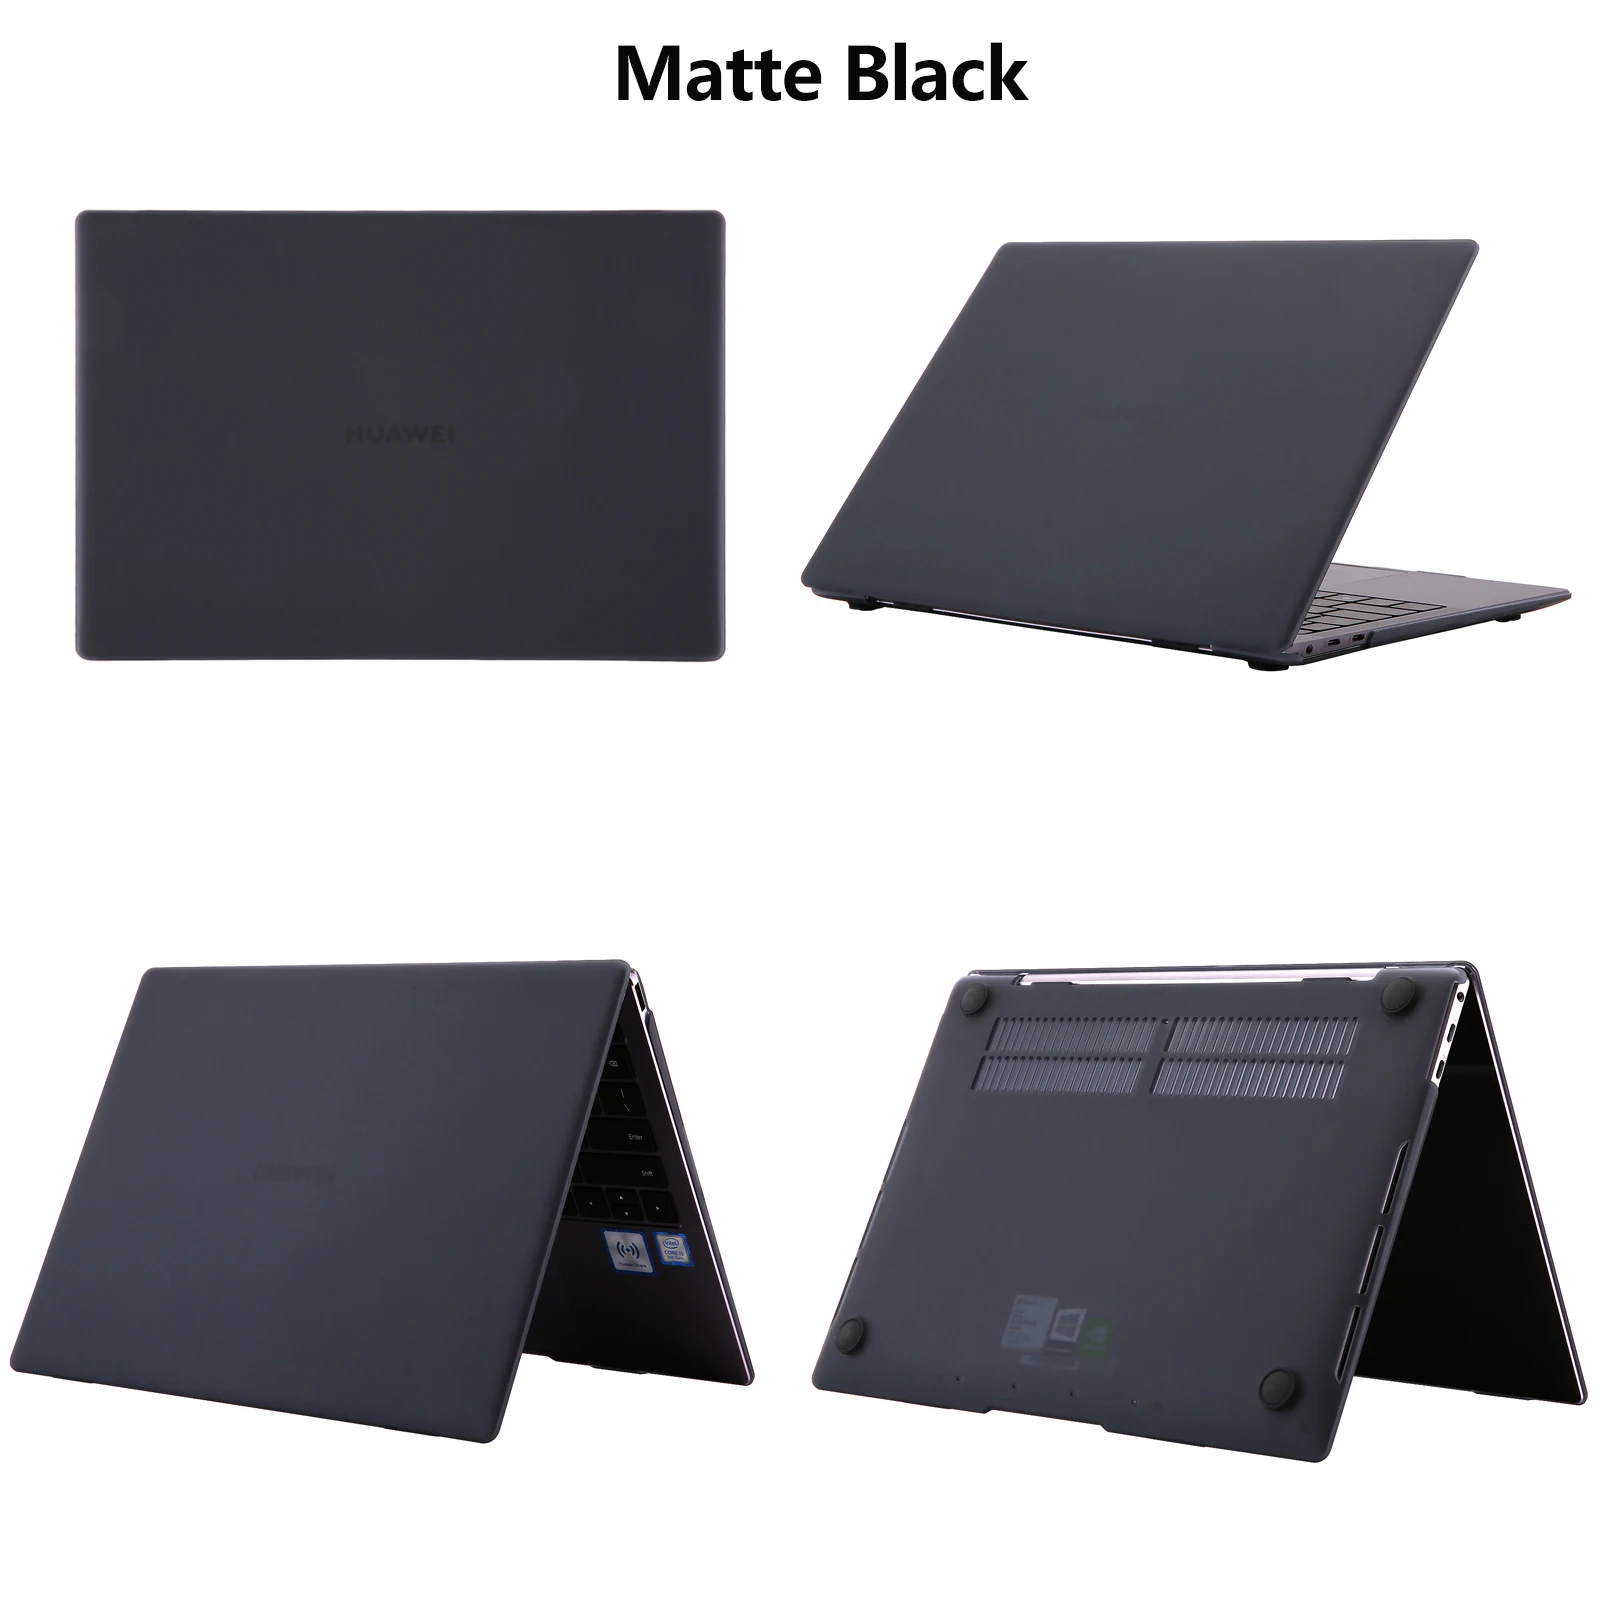 Чехол для ноутбука huawei Matebook X Pro 13,9 дюймов чехол защитный чехол против царапин+ крышка клавиатуры - Цвет: Matte Black